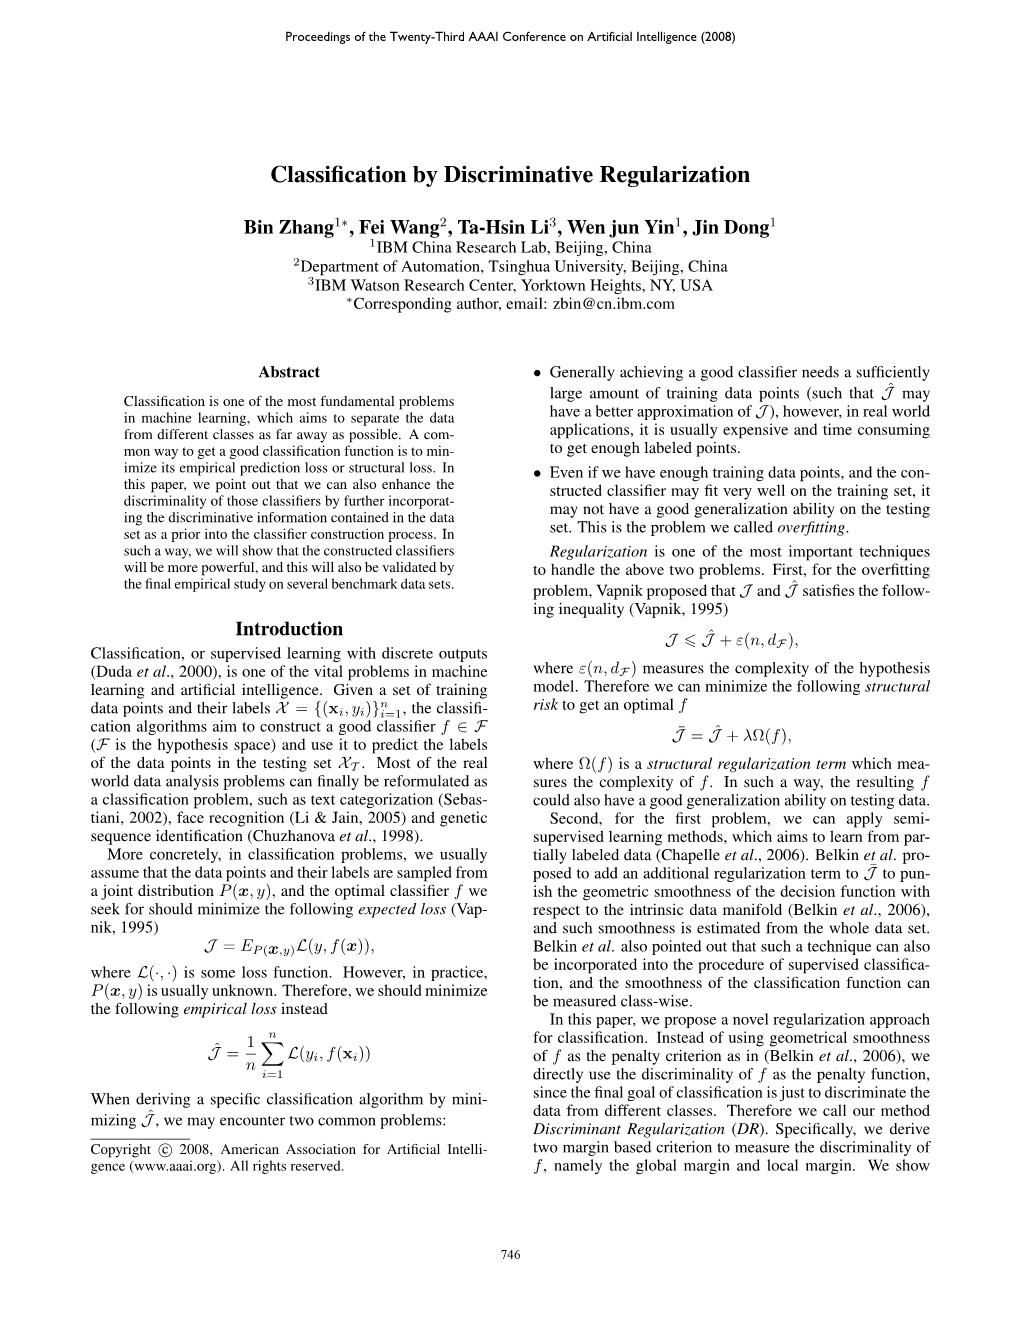 Classification by Discriminative Regularization